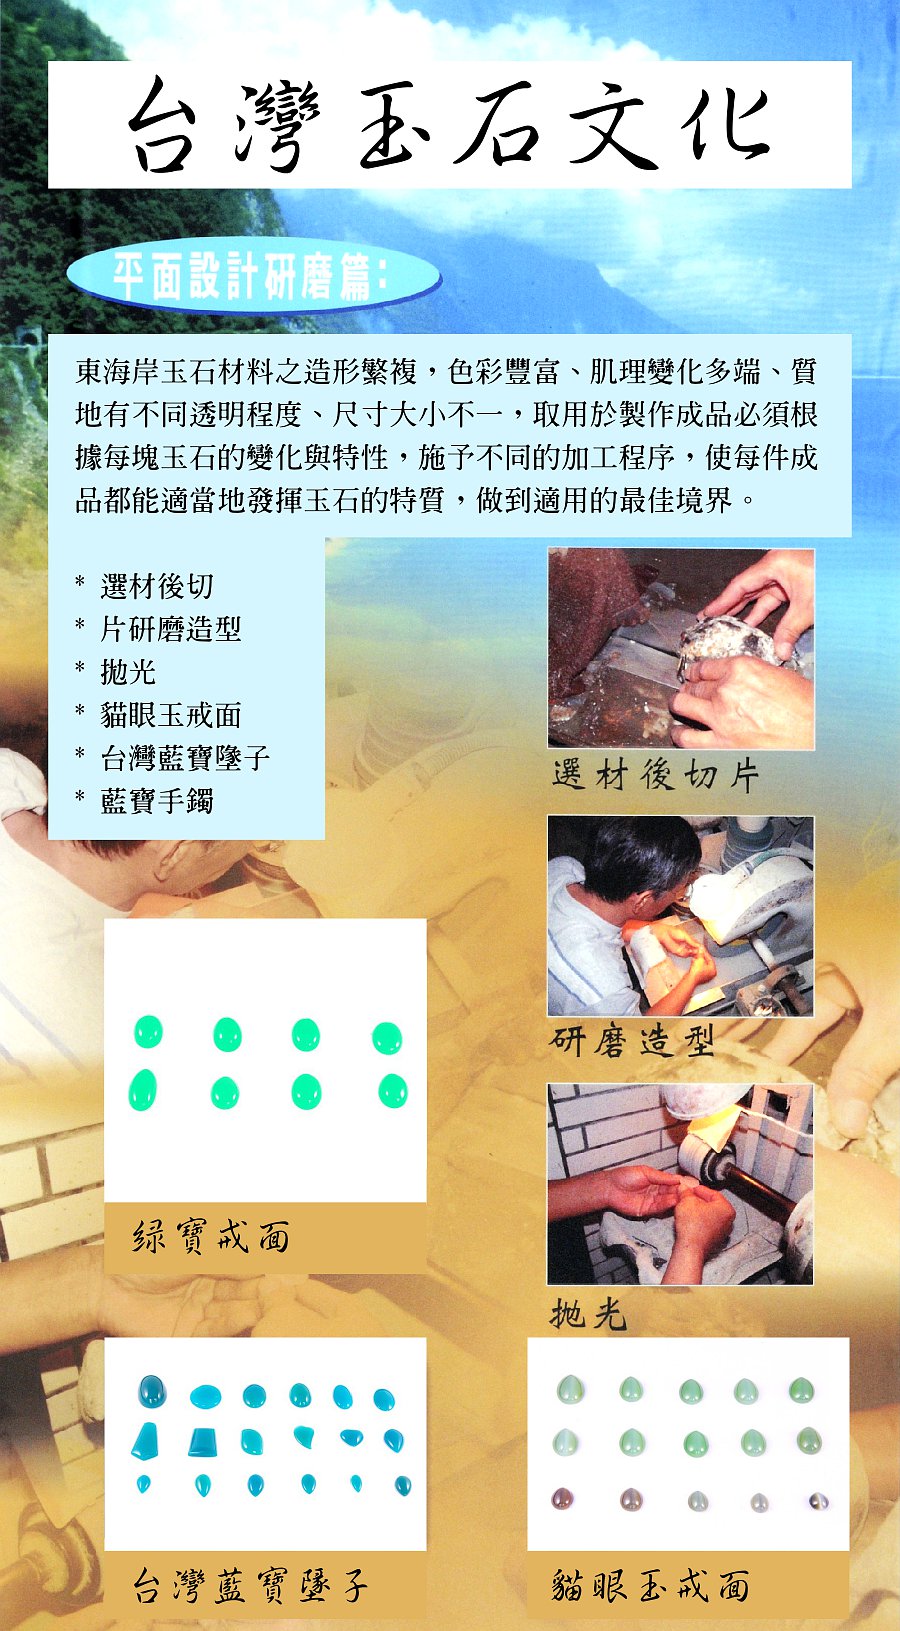 5.taiwantrasure mineral design 1 台灣玉石文化 平面設計 研磨篇